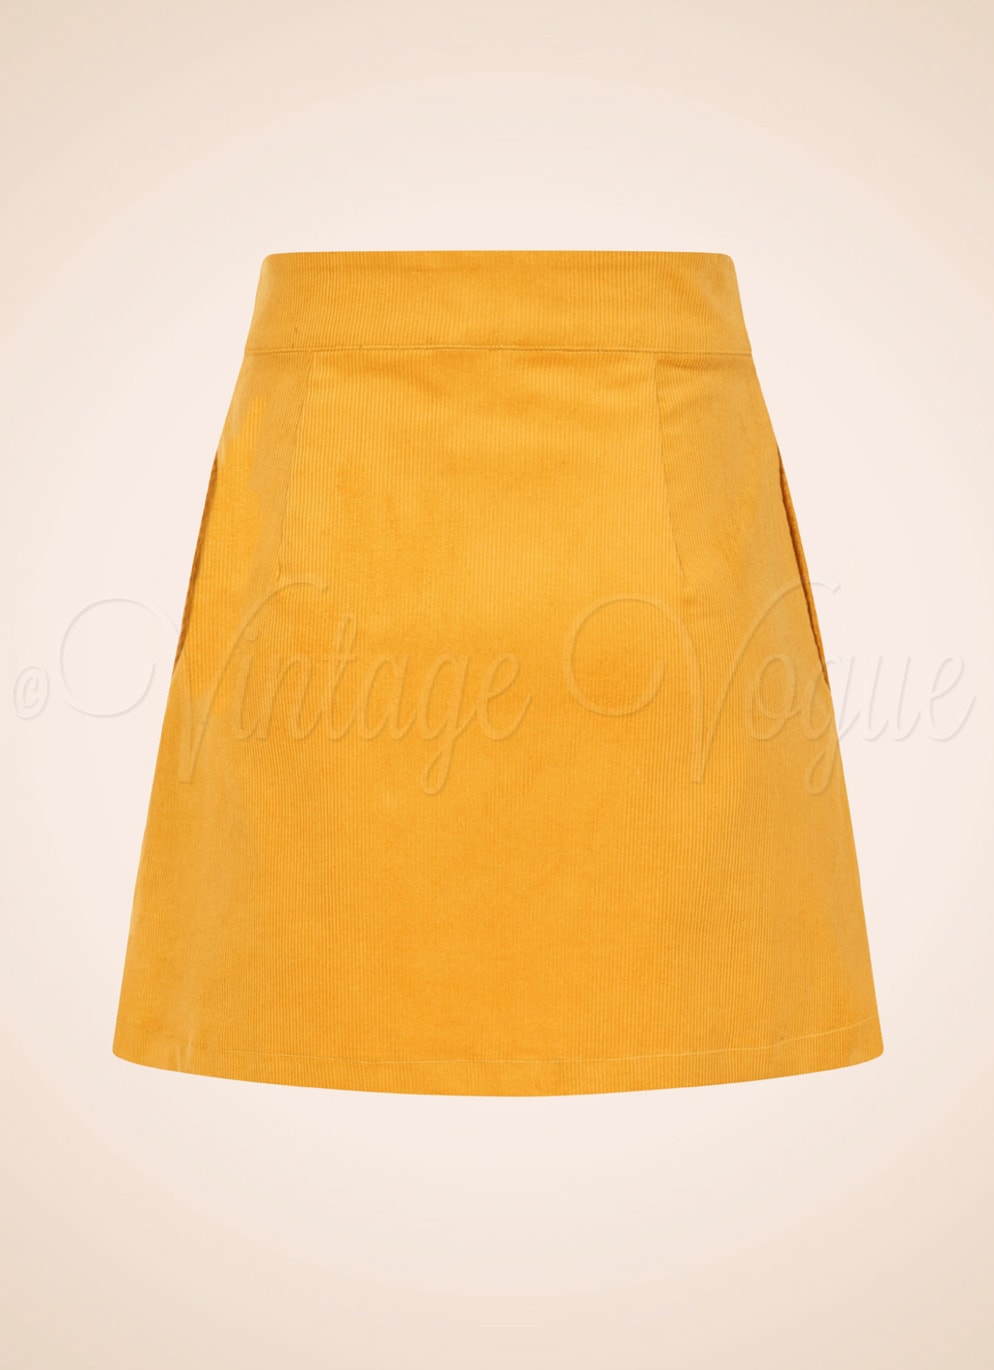 Banned 60er Jahre Retro Basic Cord Mini Rock Sundown Cordroy Skirt in Senf Gelb